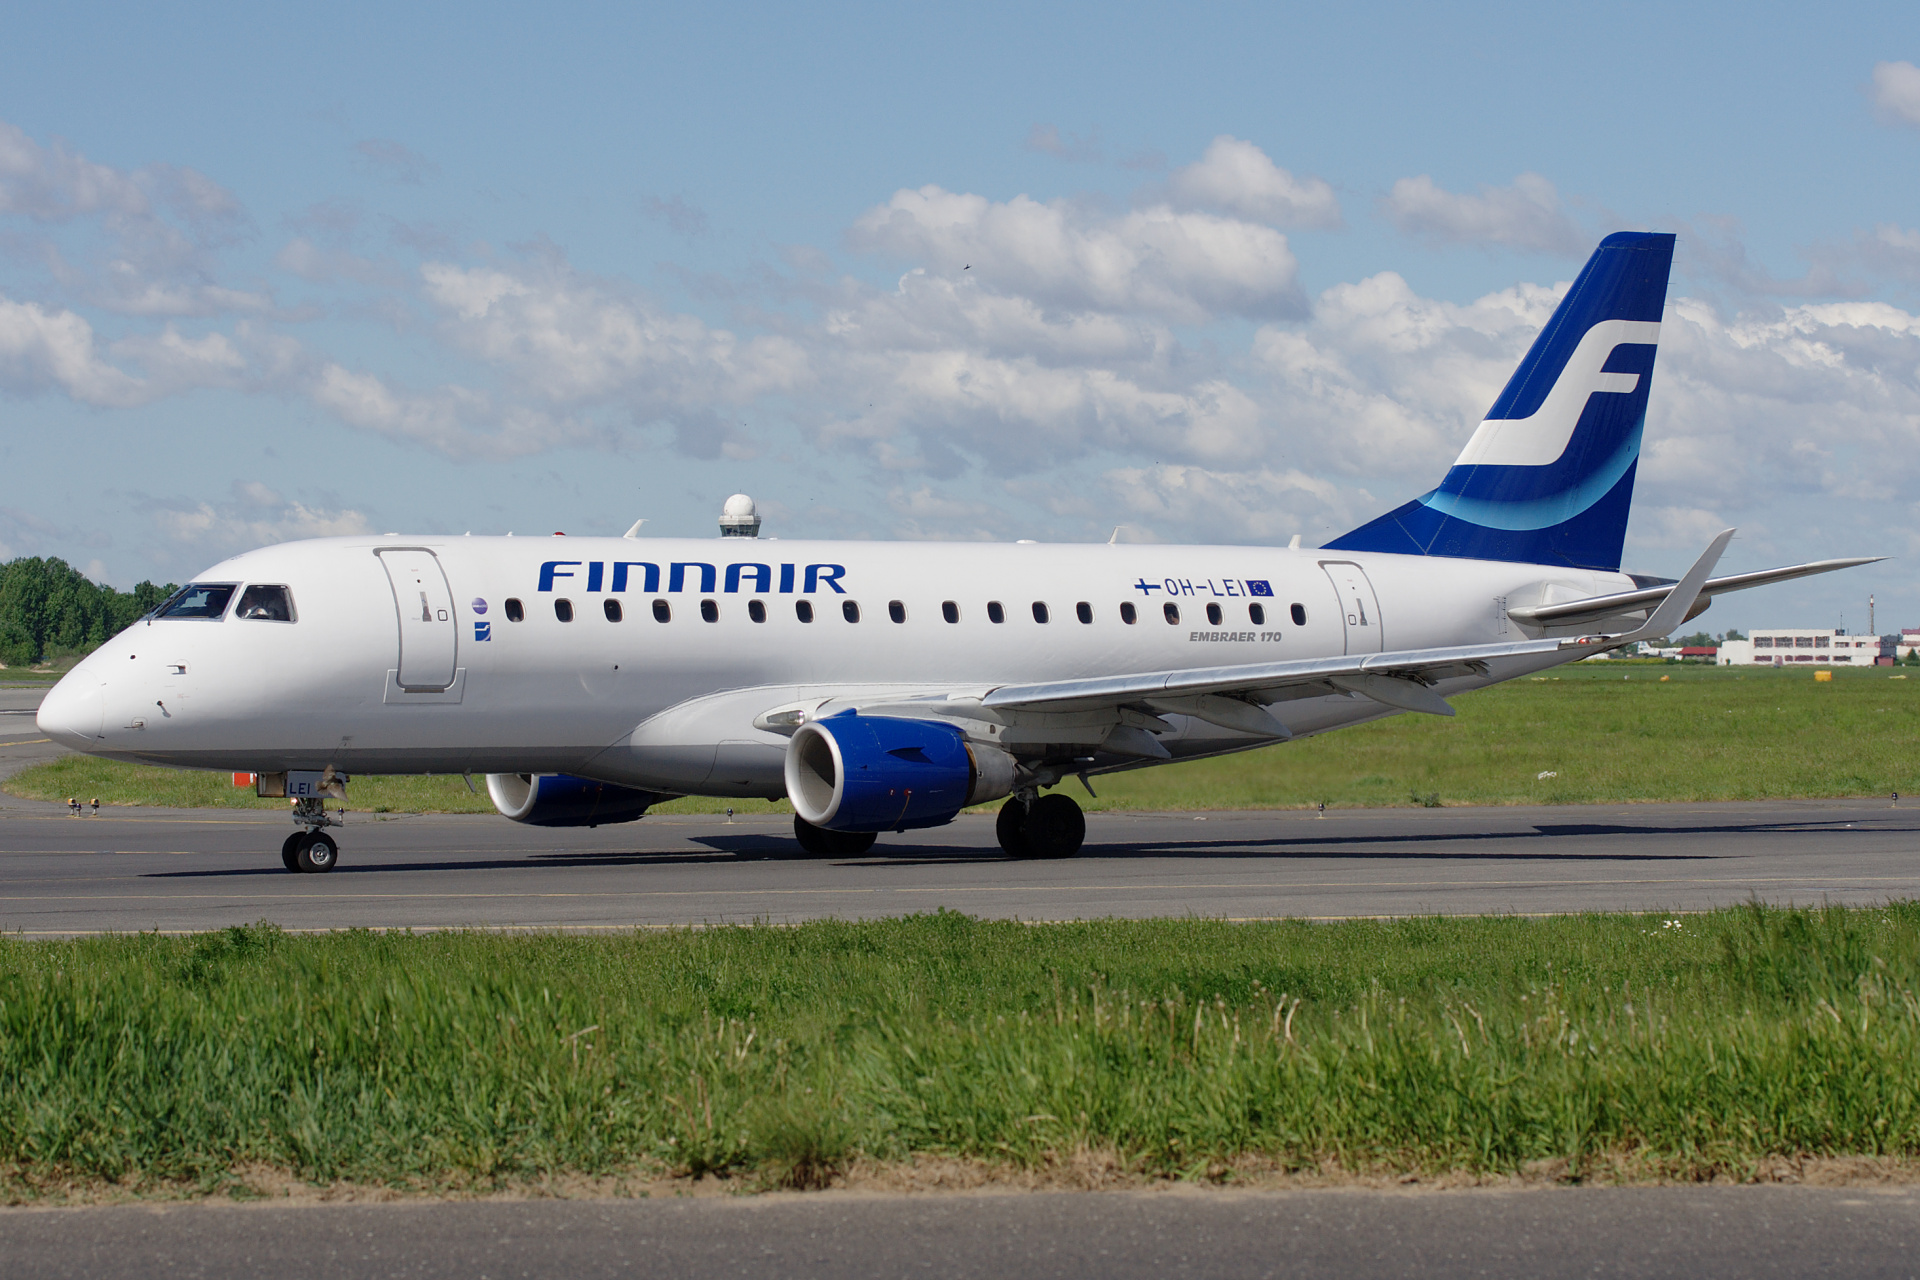 OH-LEI (Aircraft » EPWA Spotting » Embraer E170 » Finnair)